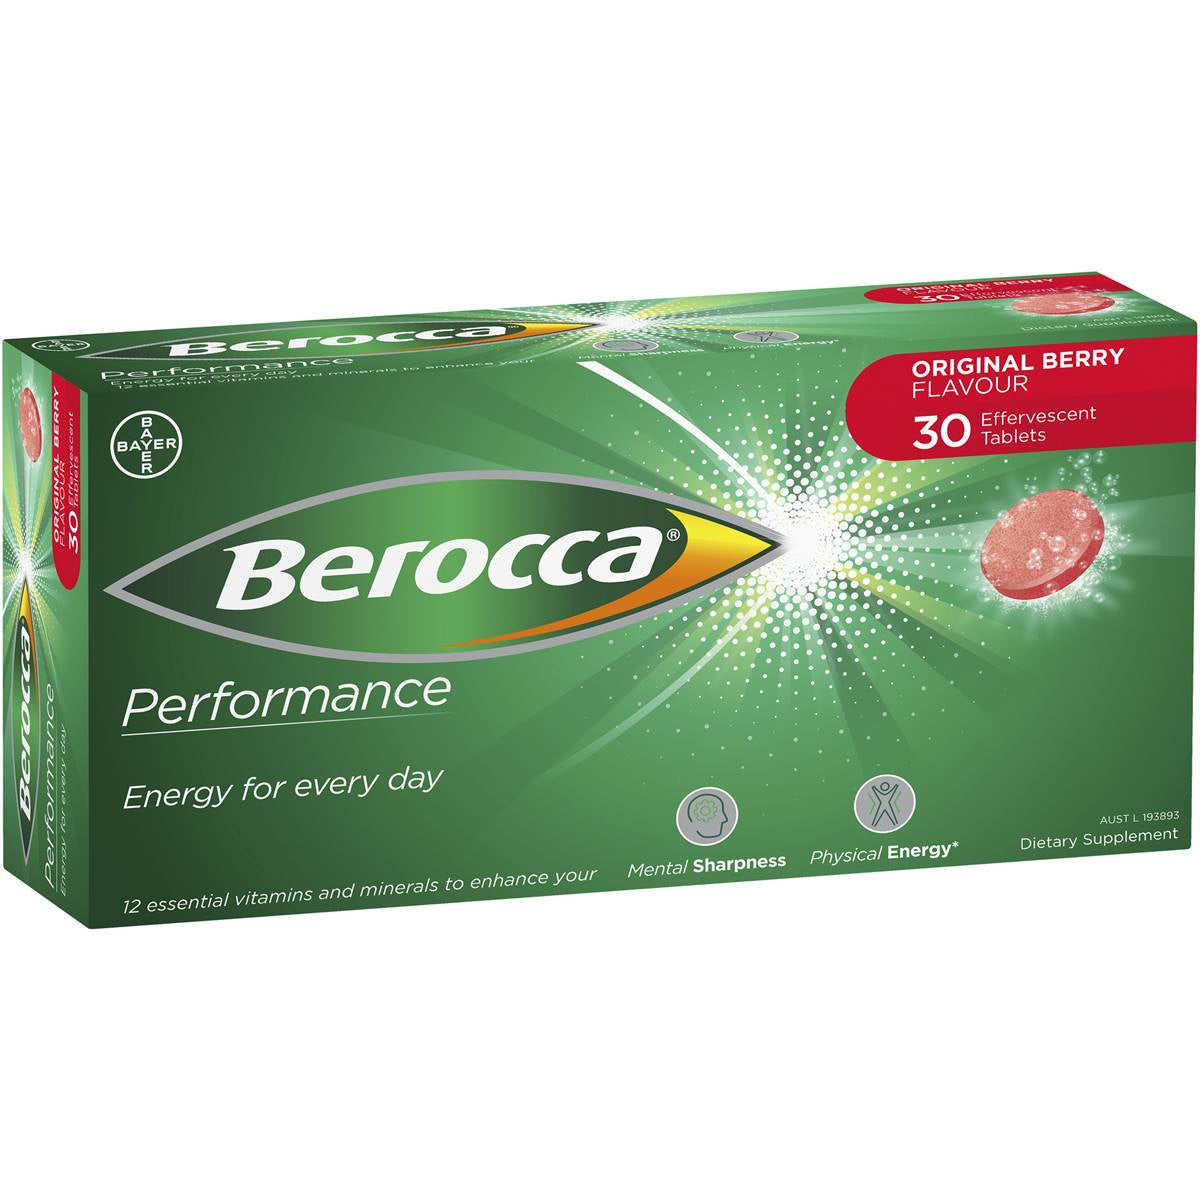 Berocca Energy Effervescent Tablet Original Berry 30pk